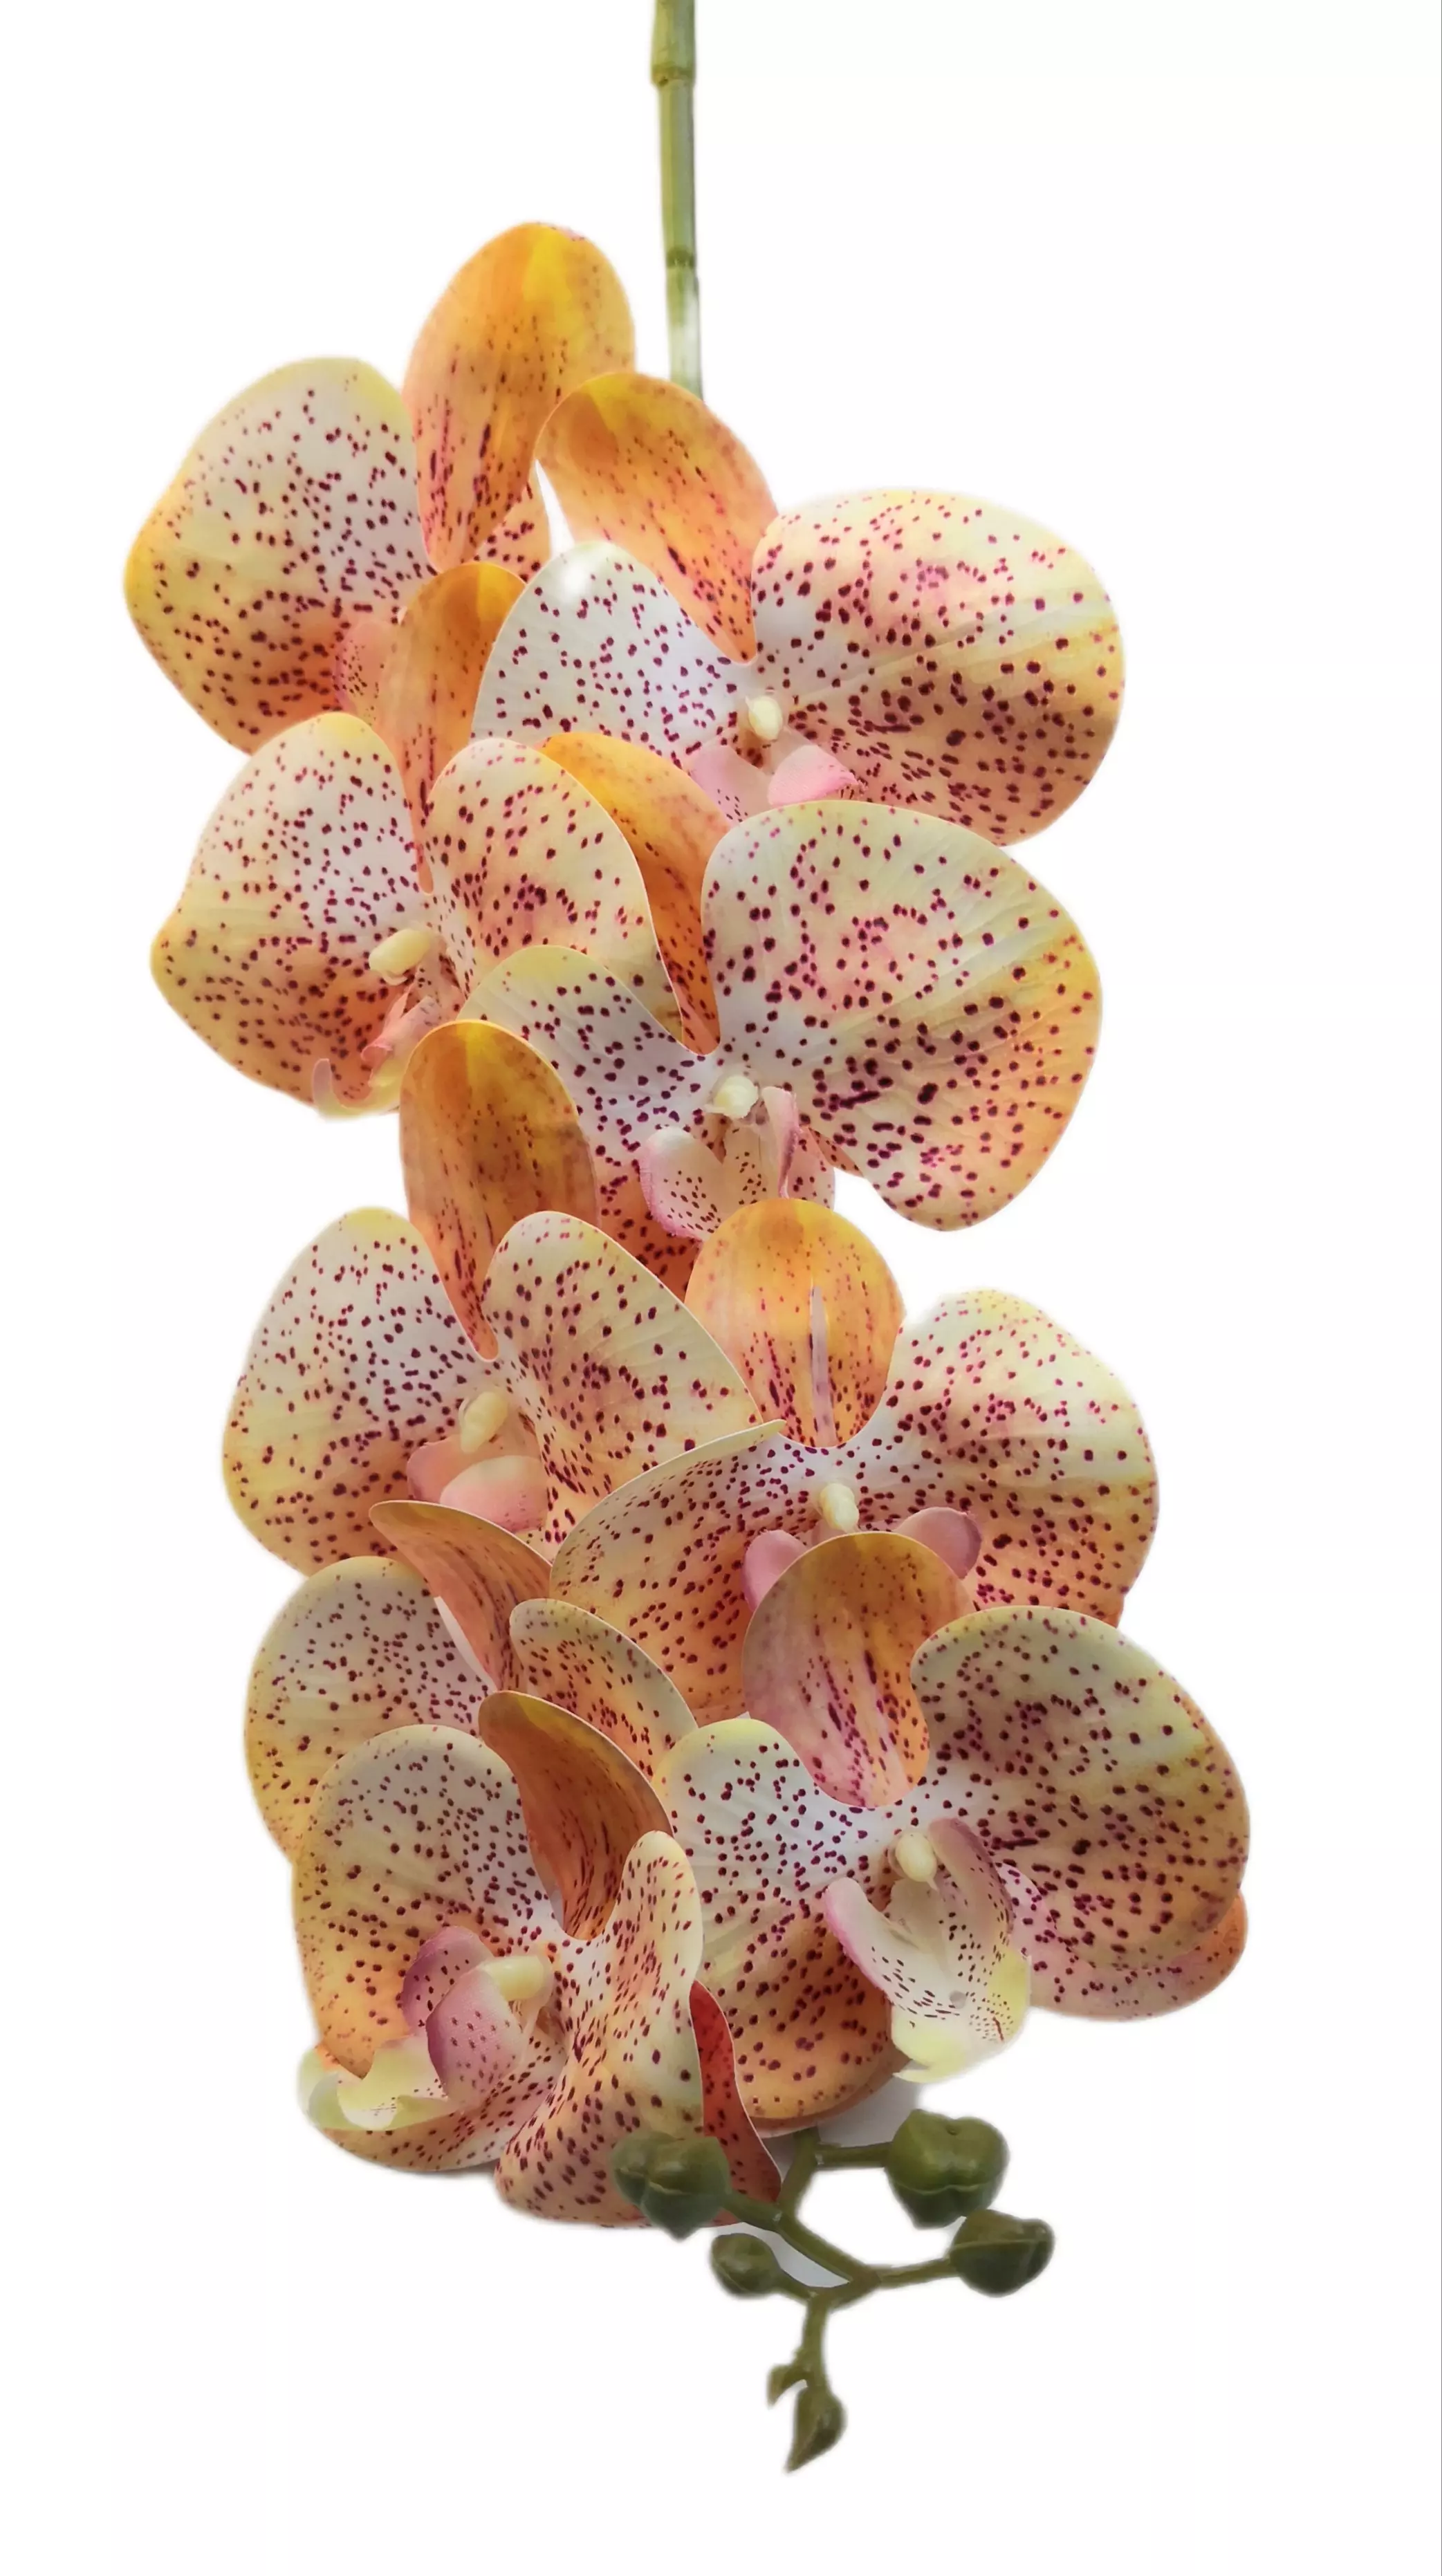 Gumi orchidea 95 cm 9 virágú 9-11 cm fejek D